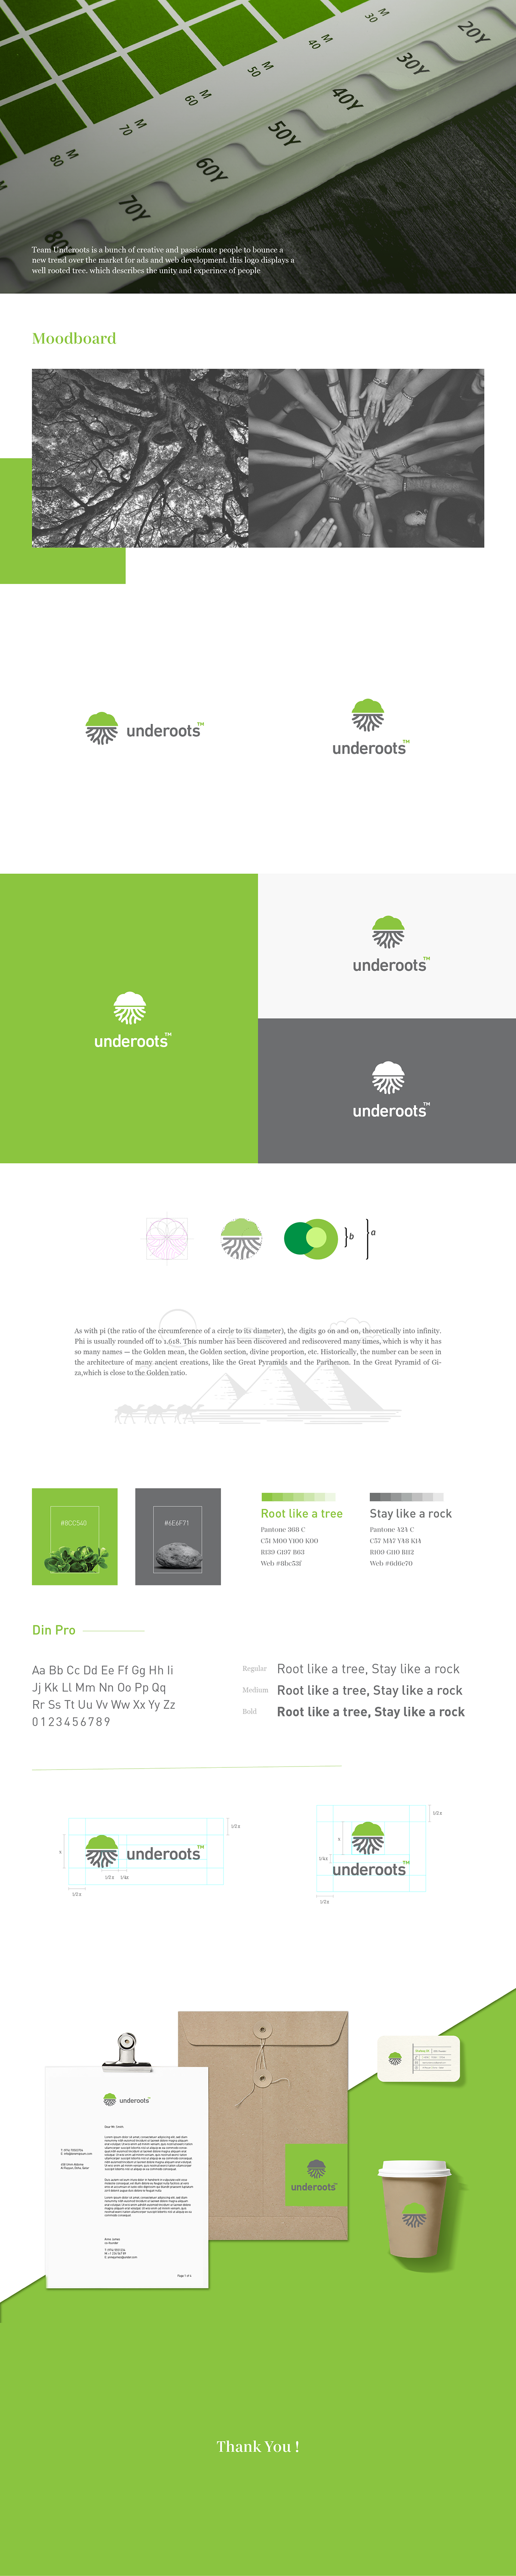 Web Design  underoots UI logo Mockup web mockup green gray creative